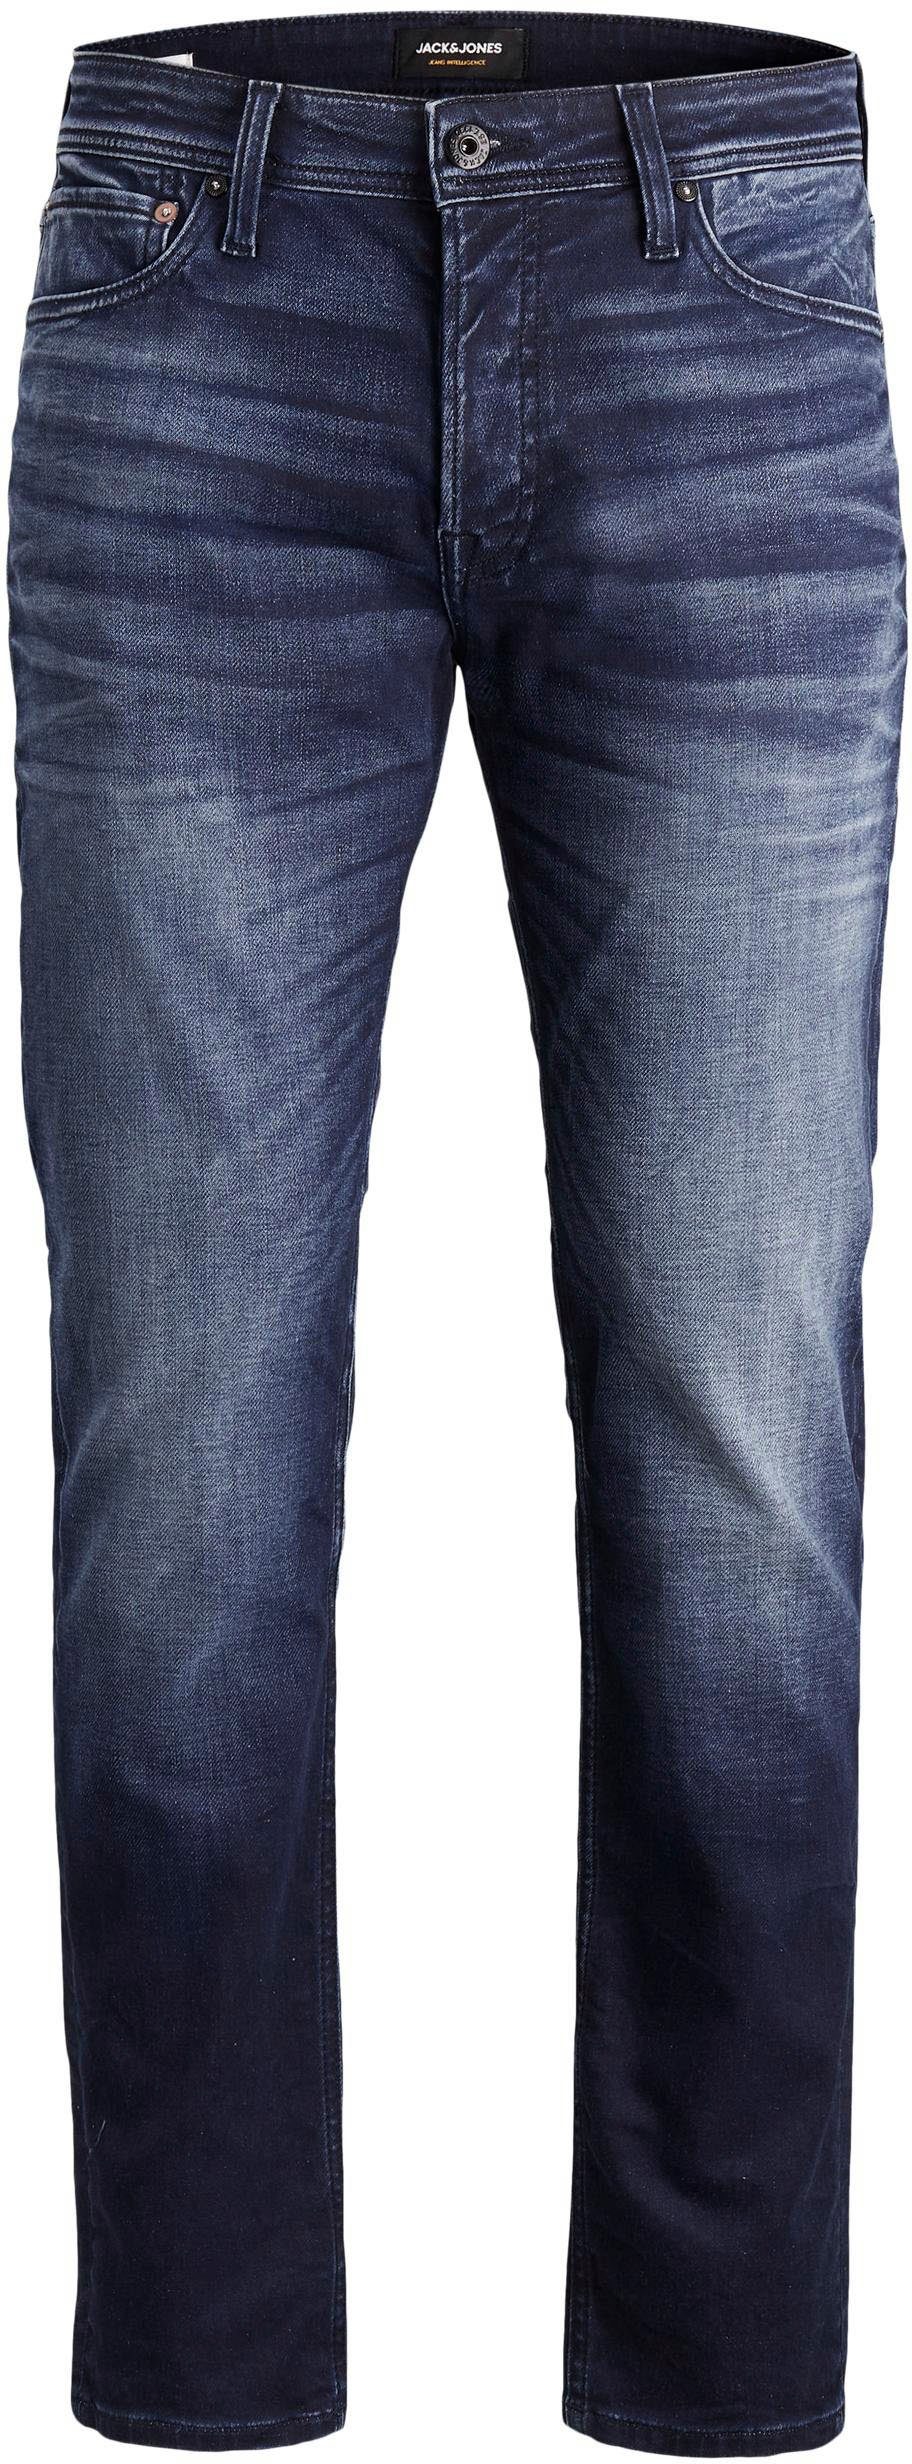 Jack & Comfort-fit-Jeans Mike Jones blue-denim